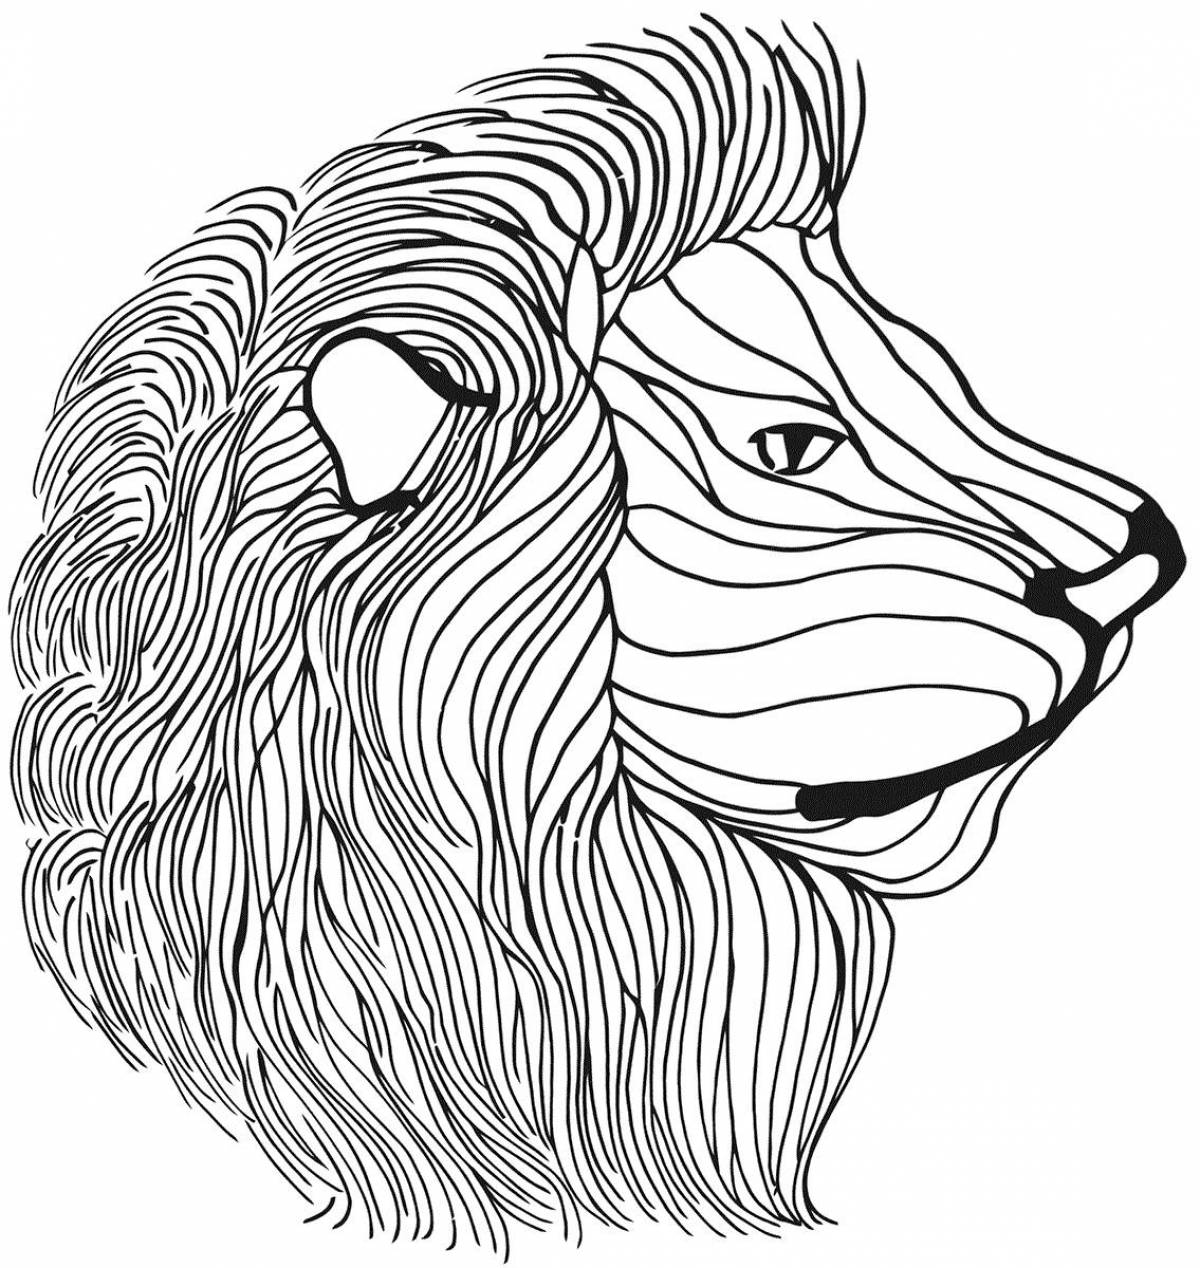 Рисунок голова льва